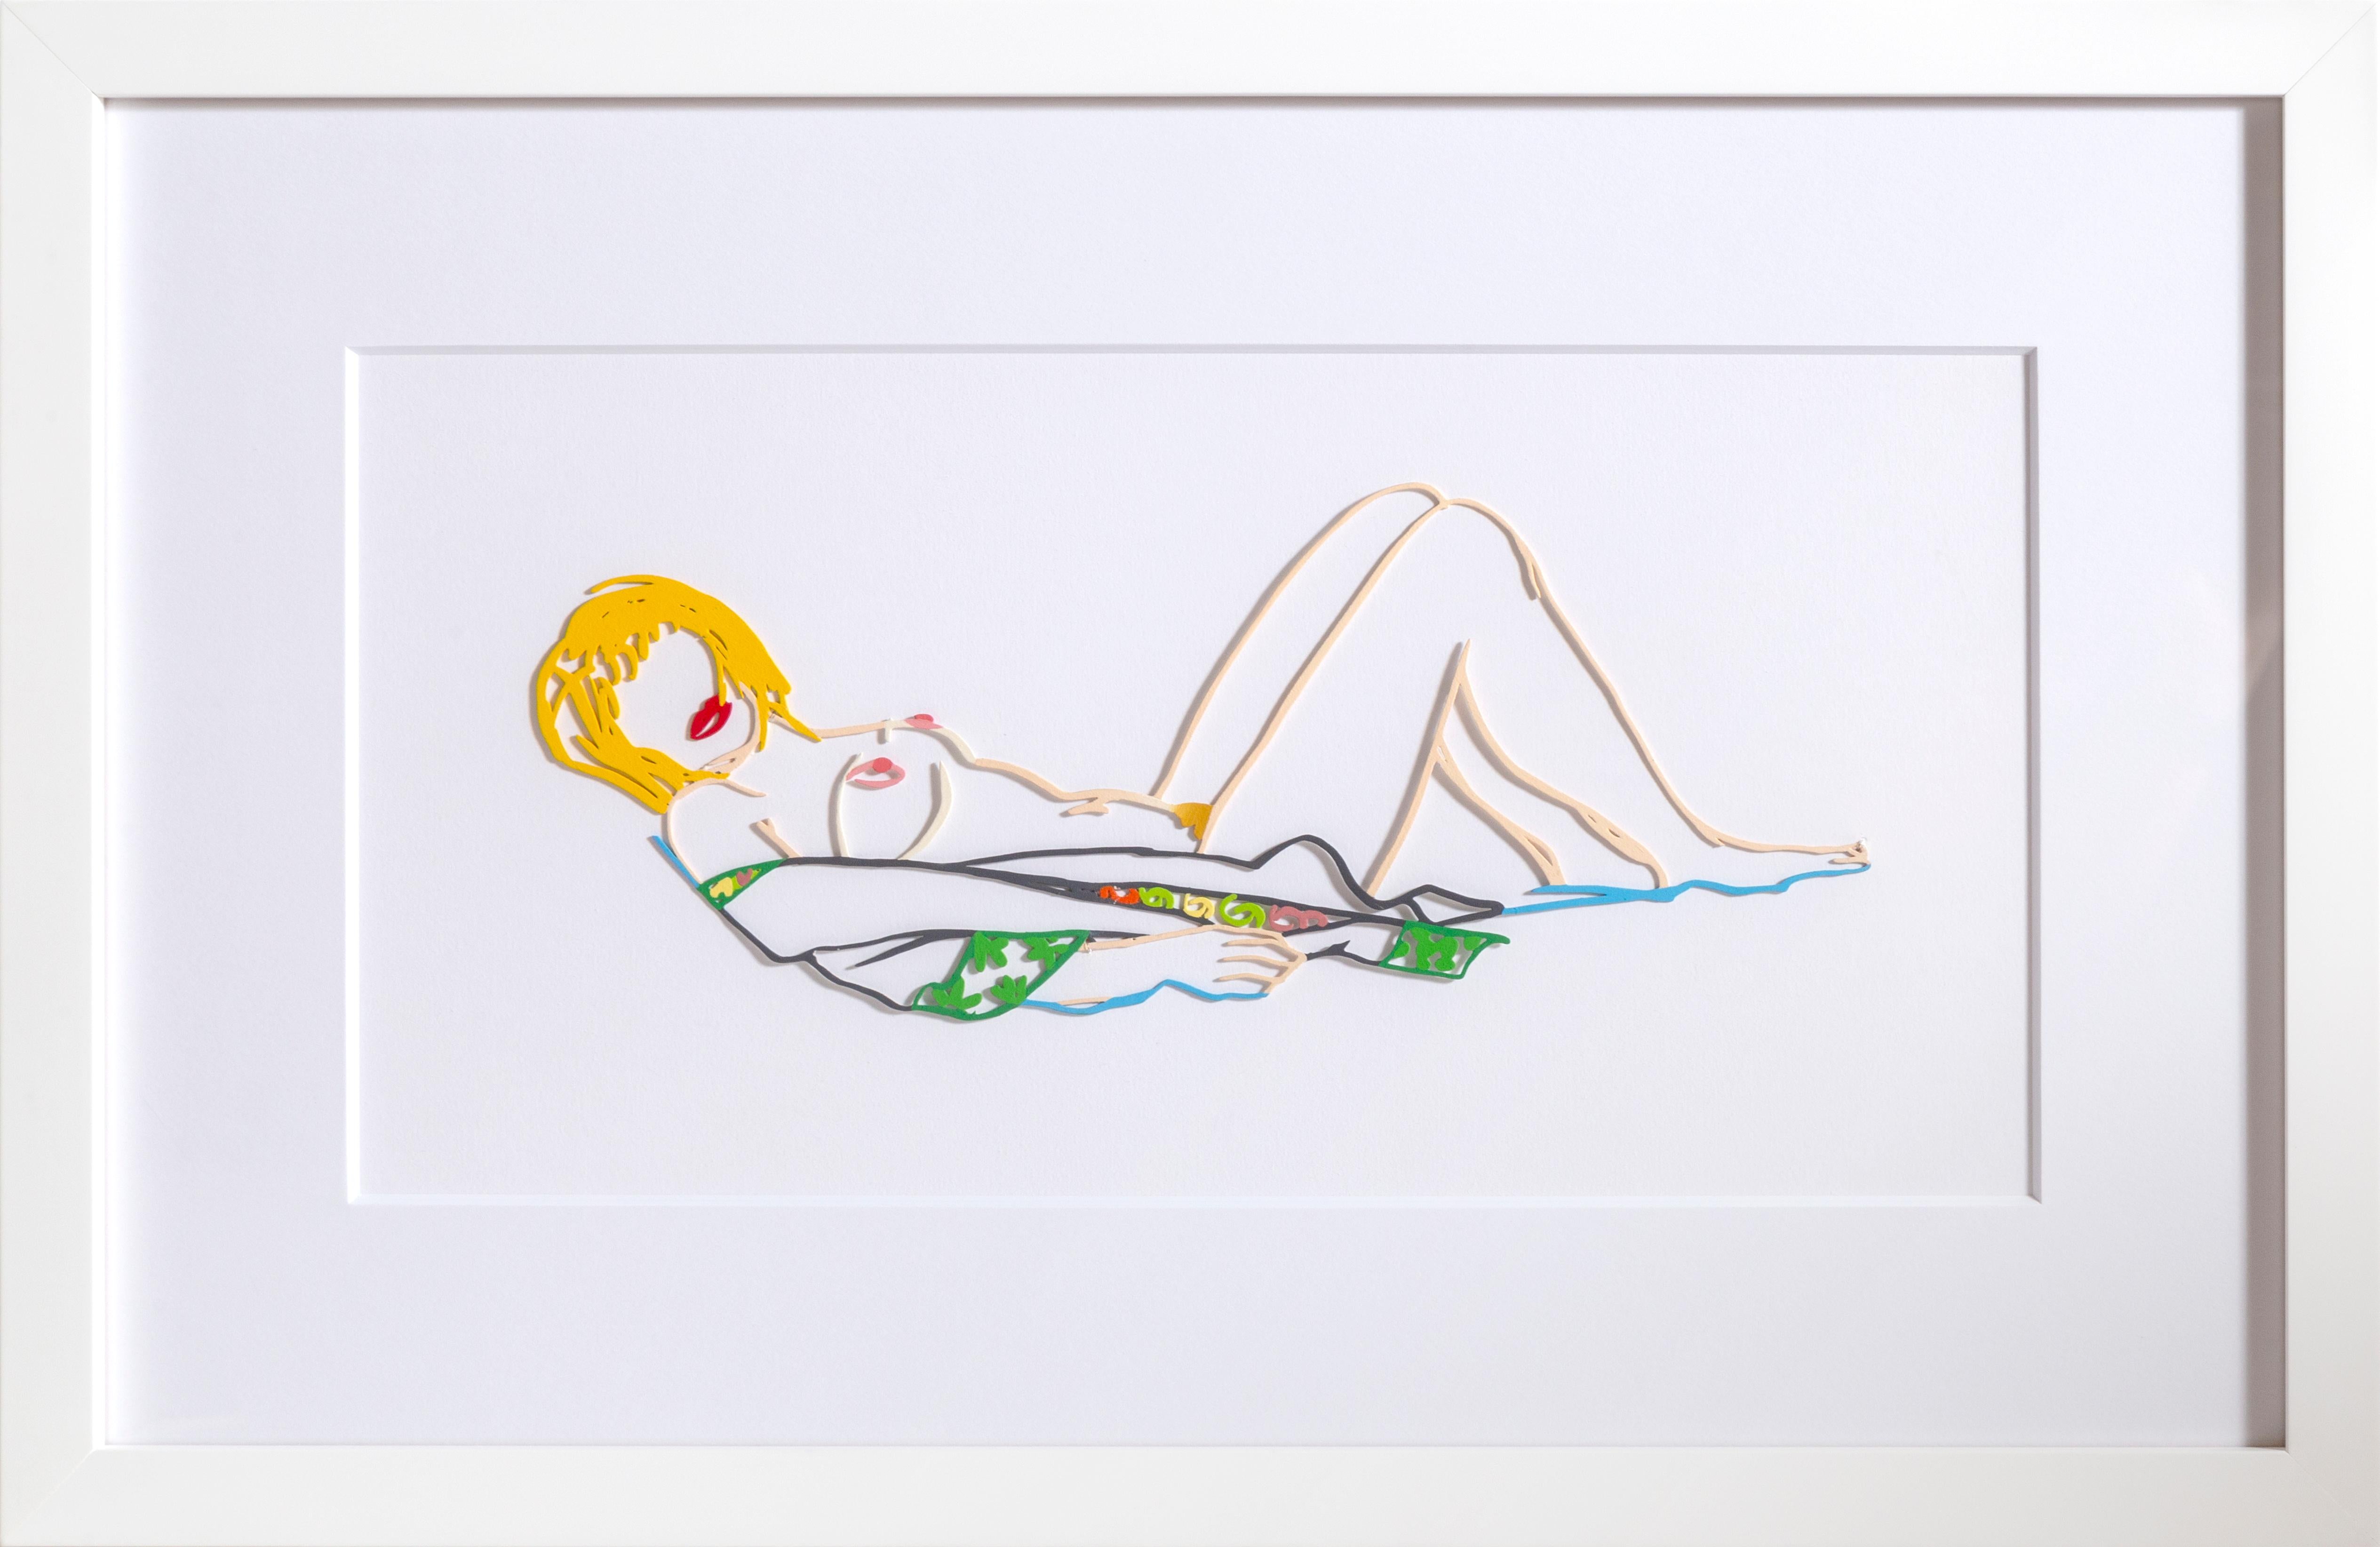 Monica Lying Down on Robe - Print by Tom Wesselmann